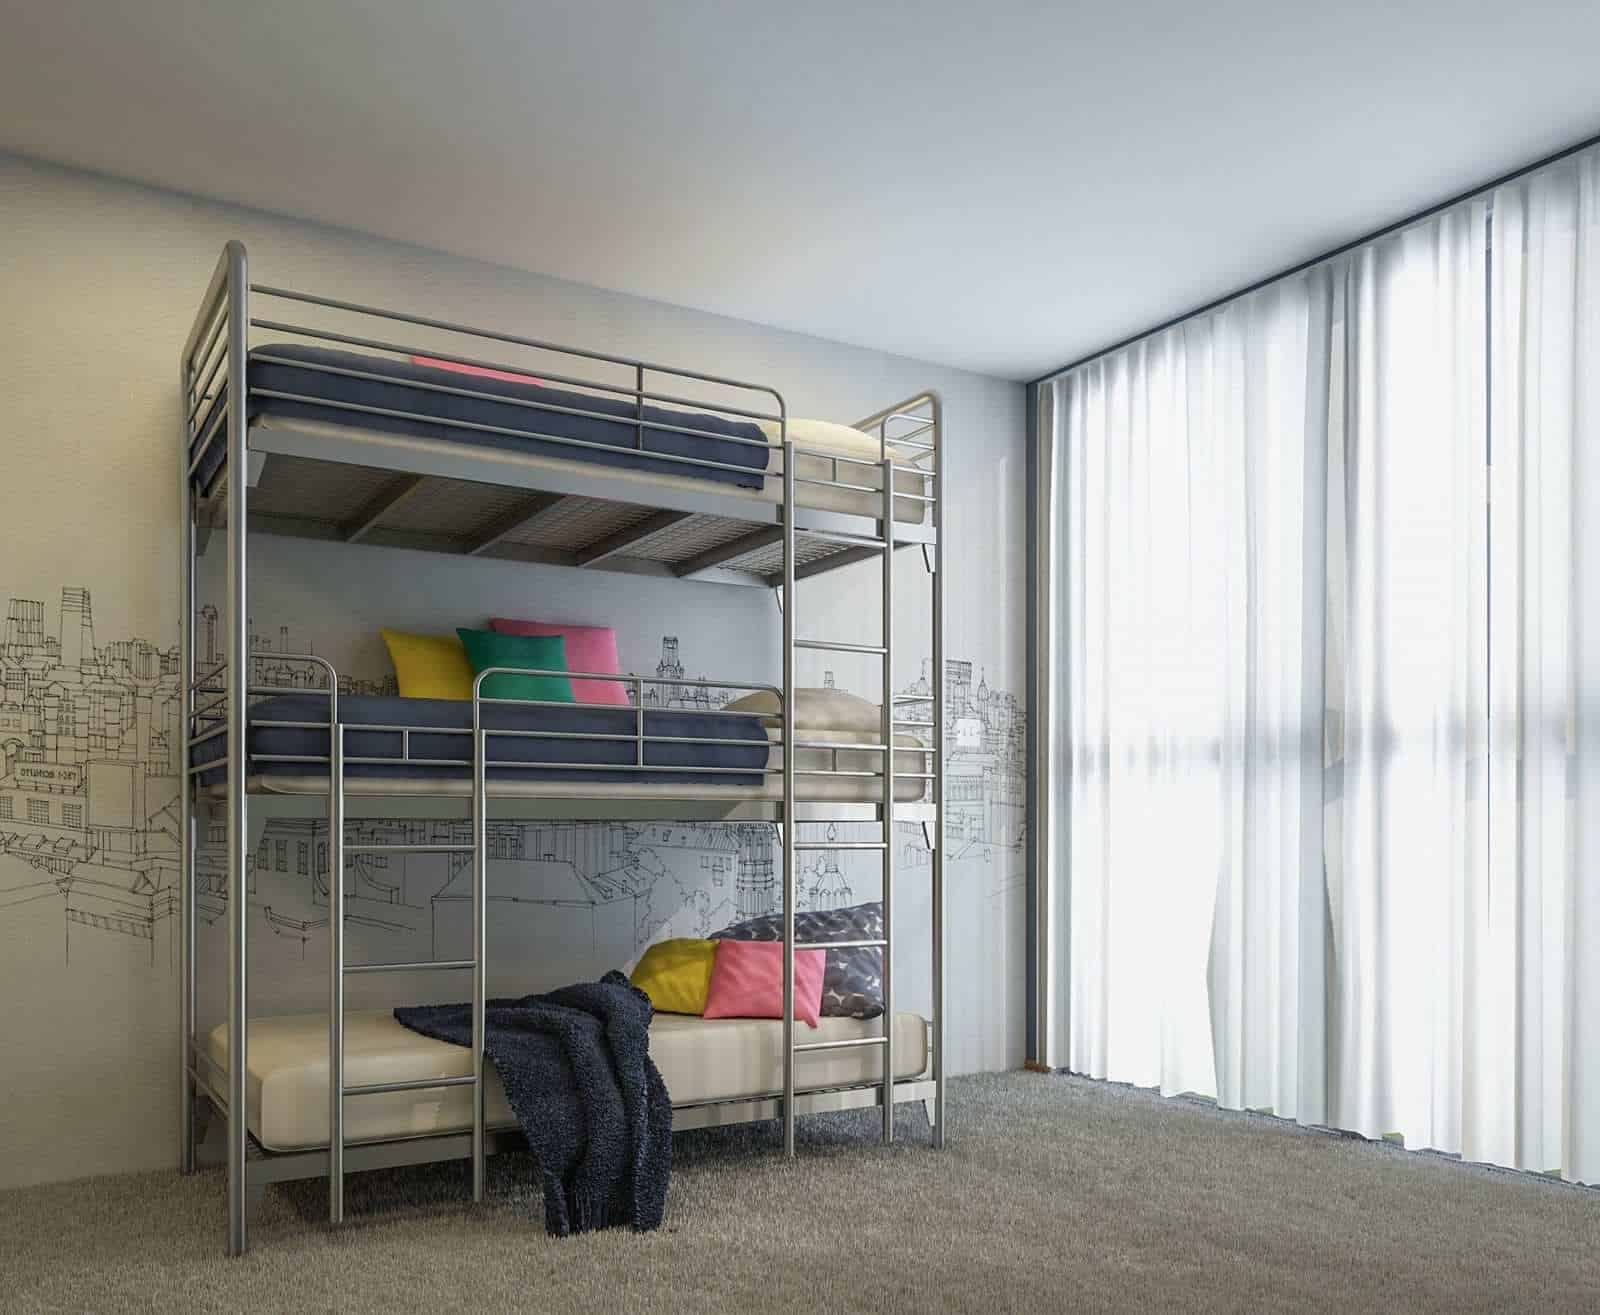 Triple bunk beds, three tier bunk beds, triple sleeper beds, heavy-duty bunk beds